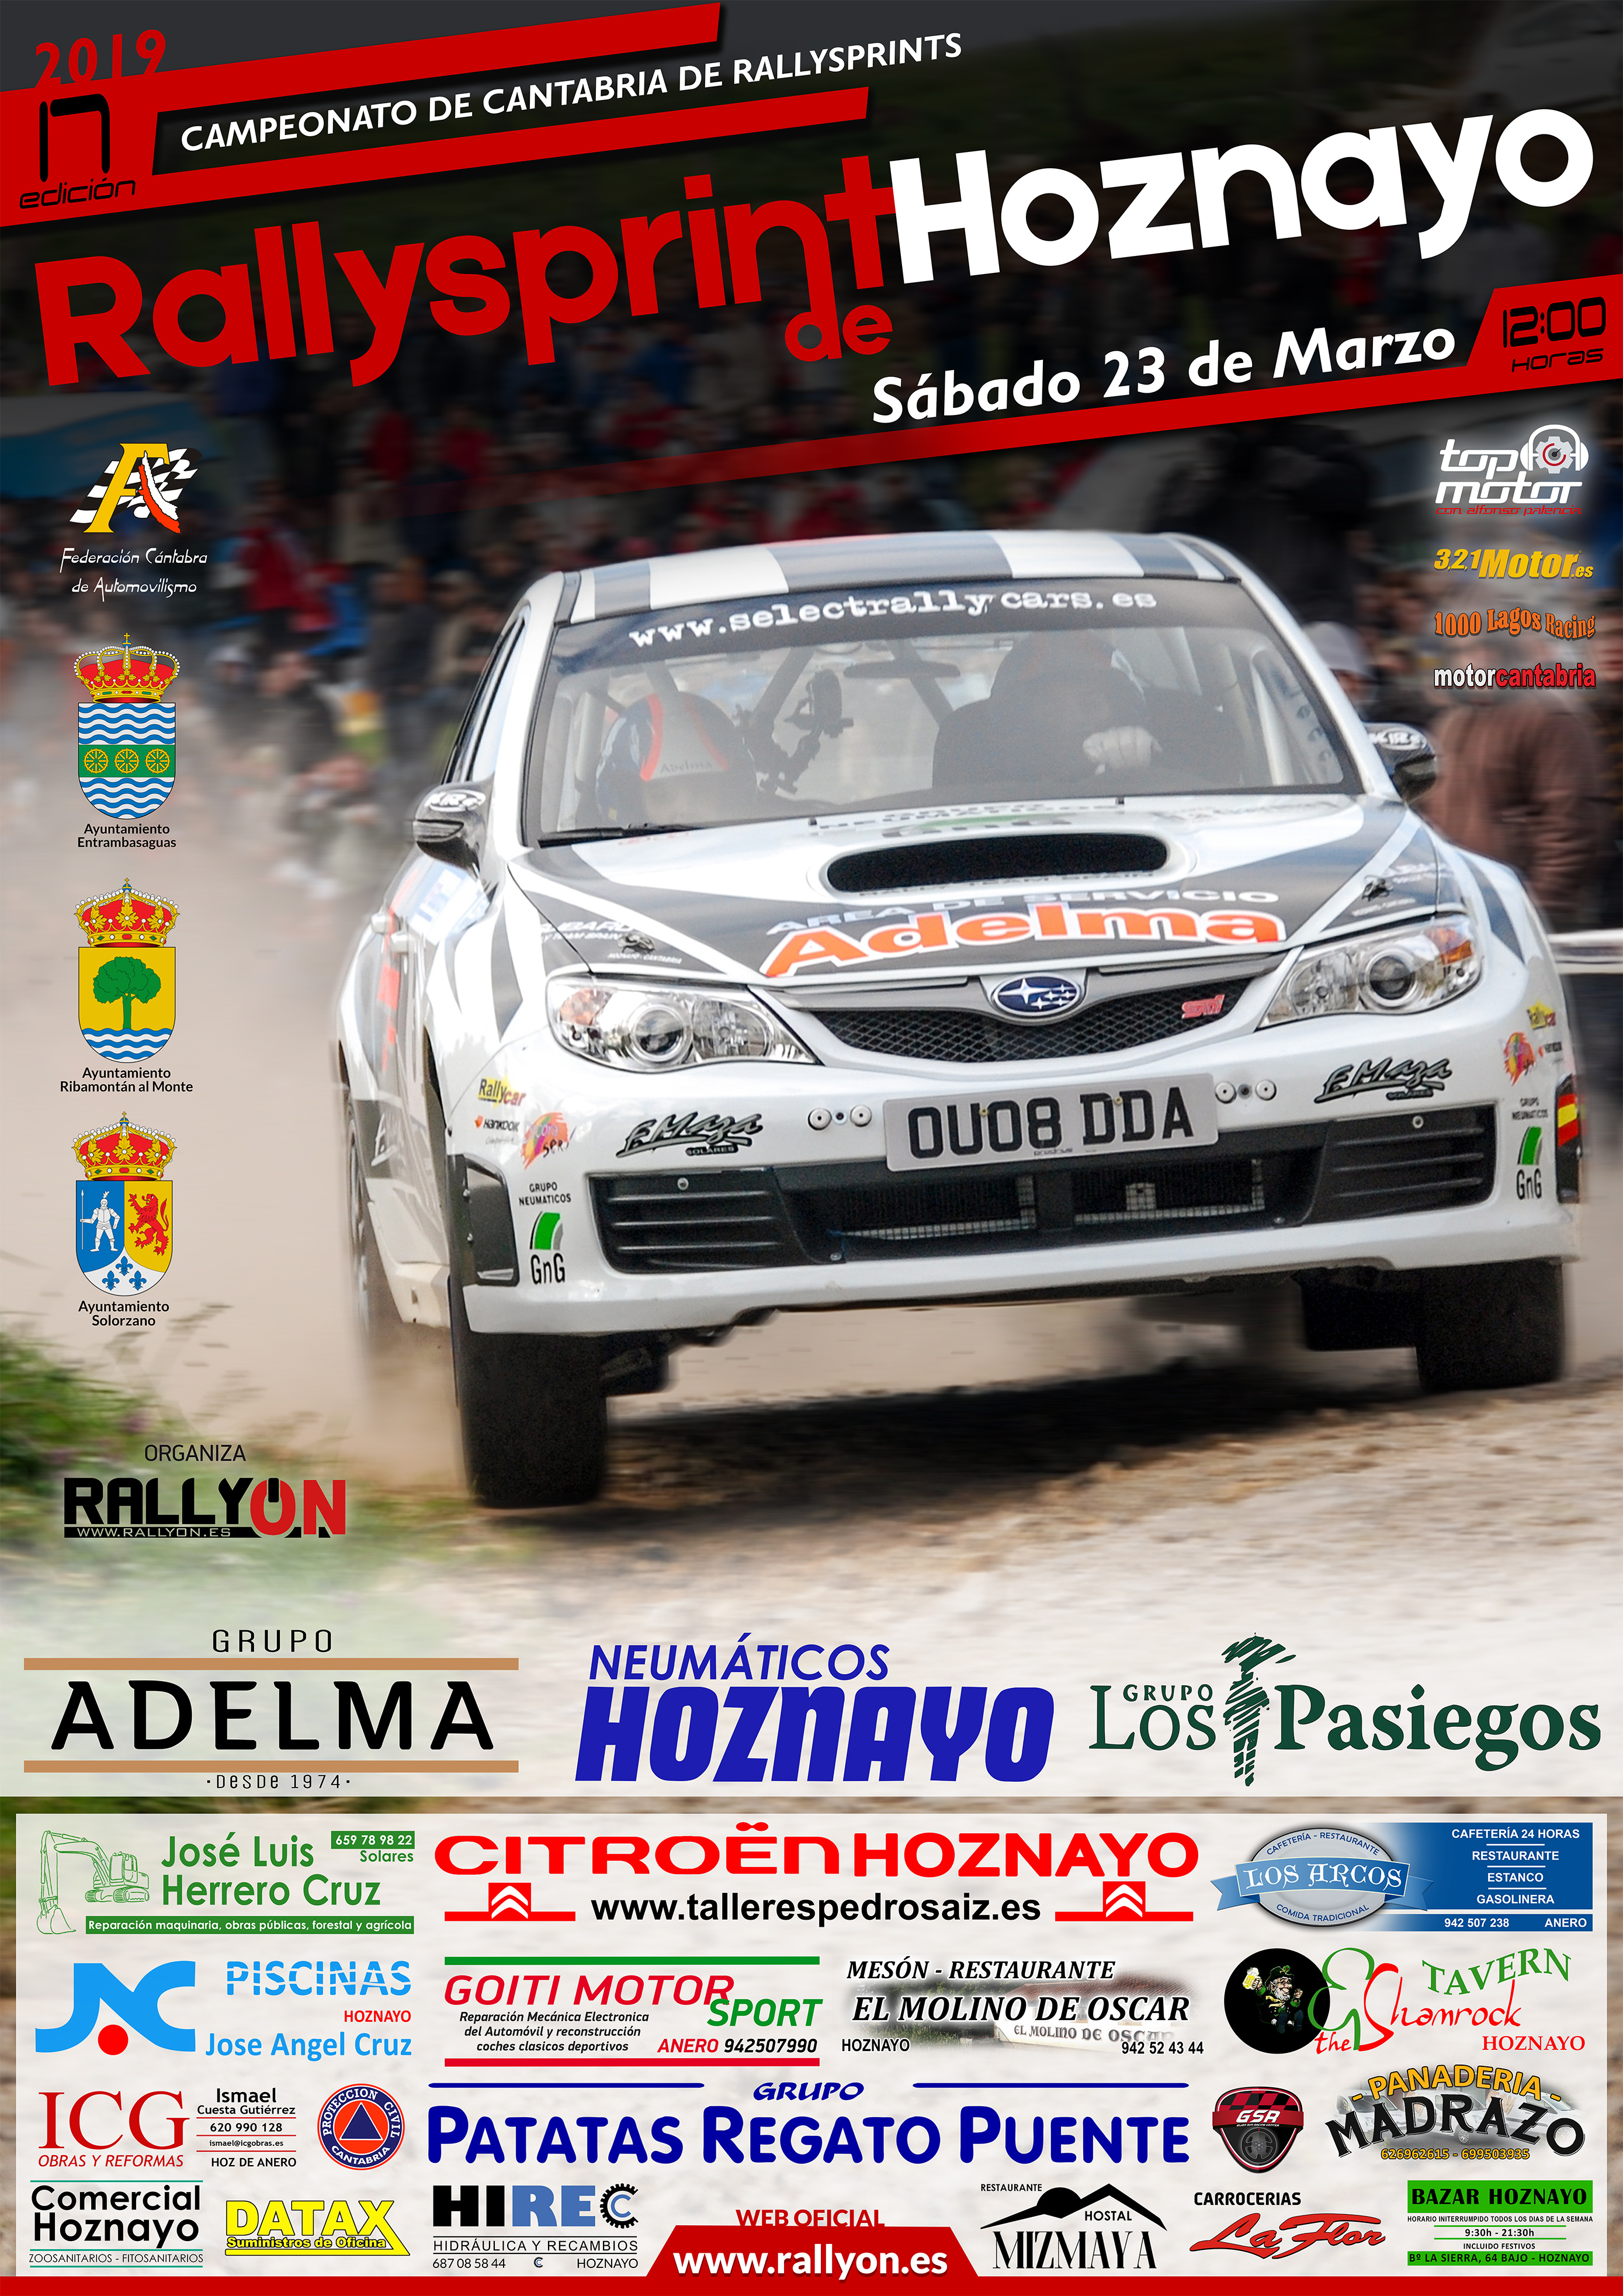 XVII Rallysprint de Hoznayo